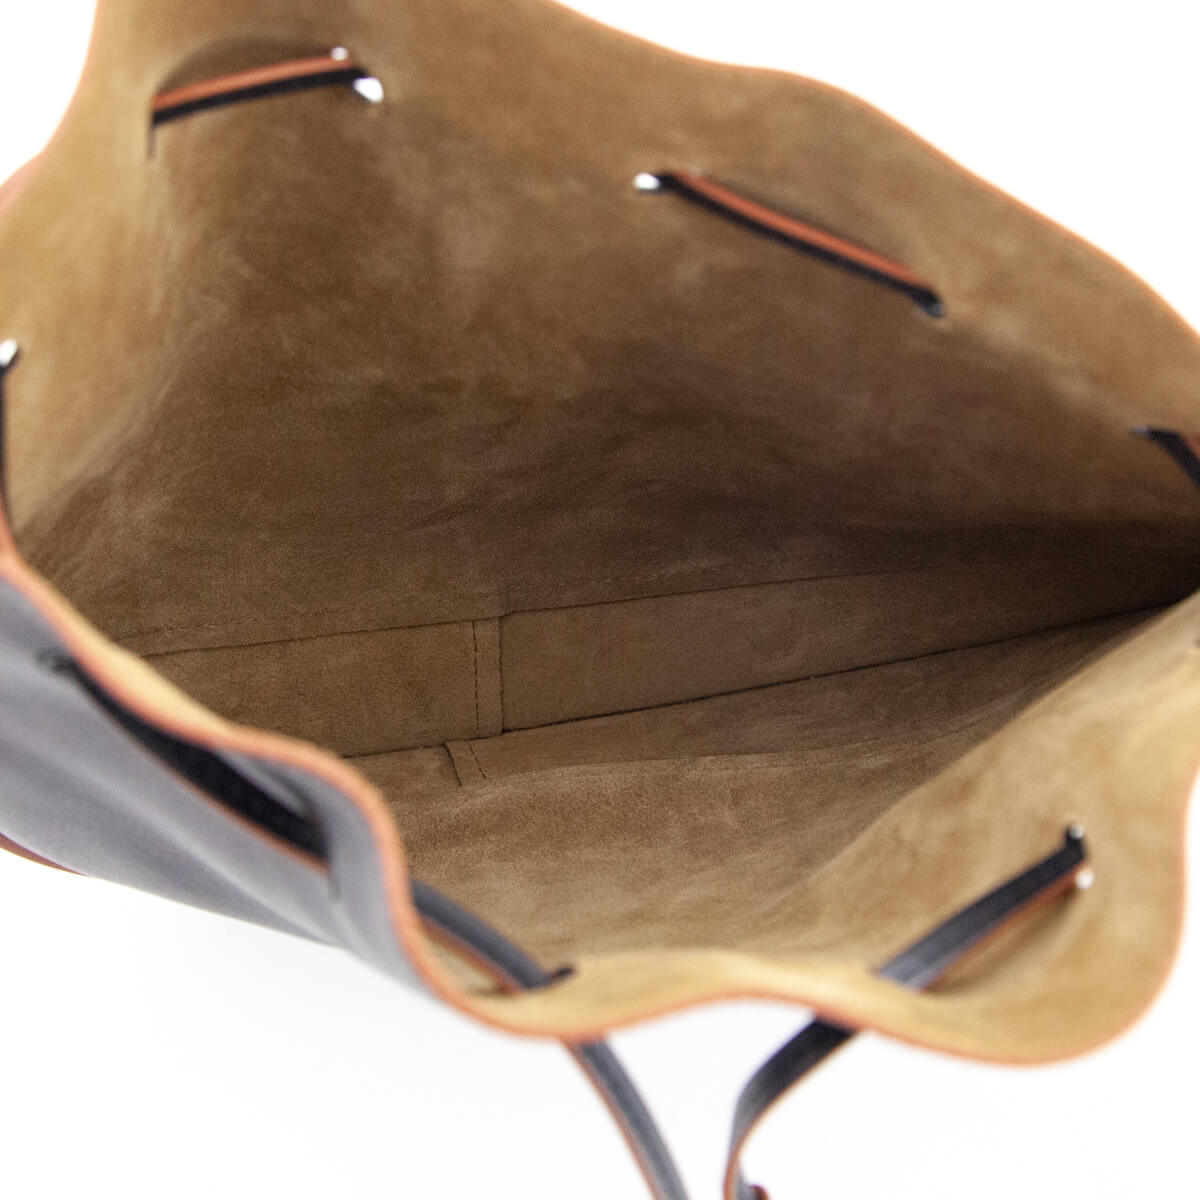 Loewe Black & Tan Nappa Horseshoe Bag - Love that Bag etc - Preowned Authentic Designer Handbags & Preloved Fashions